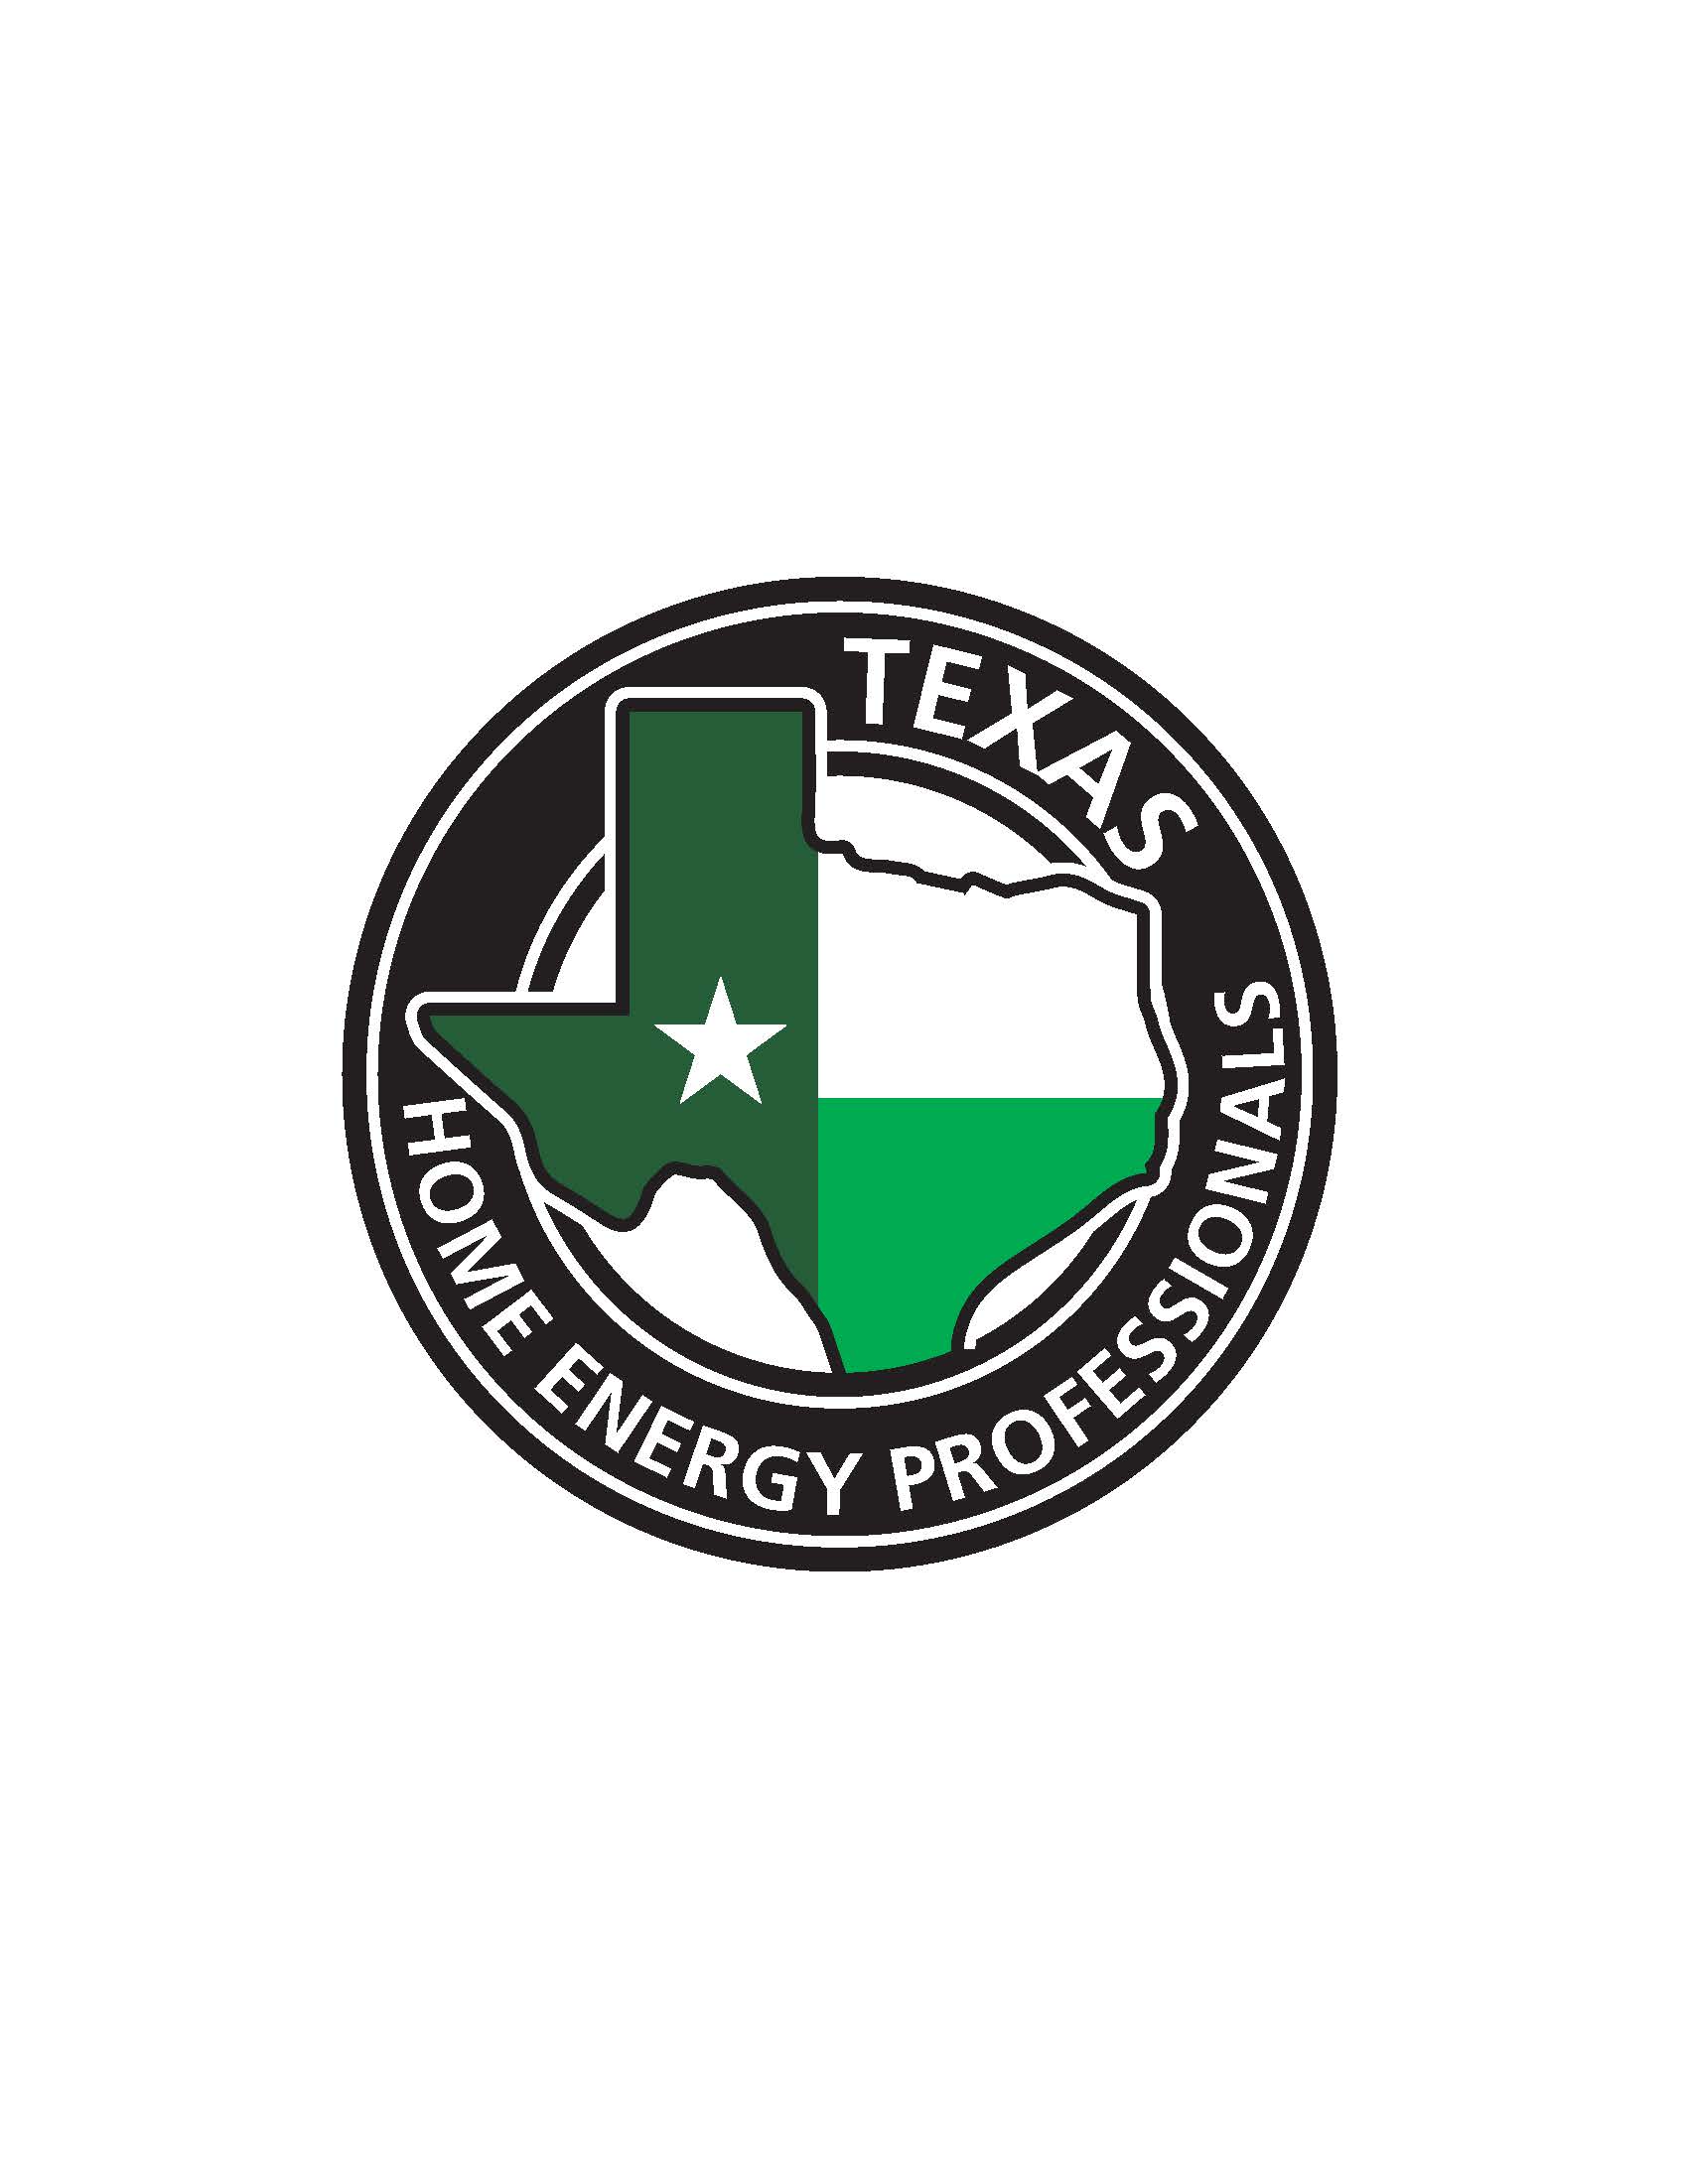 Texas Home Energy Professionals company logo